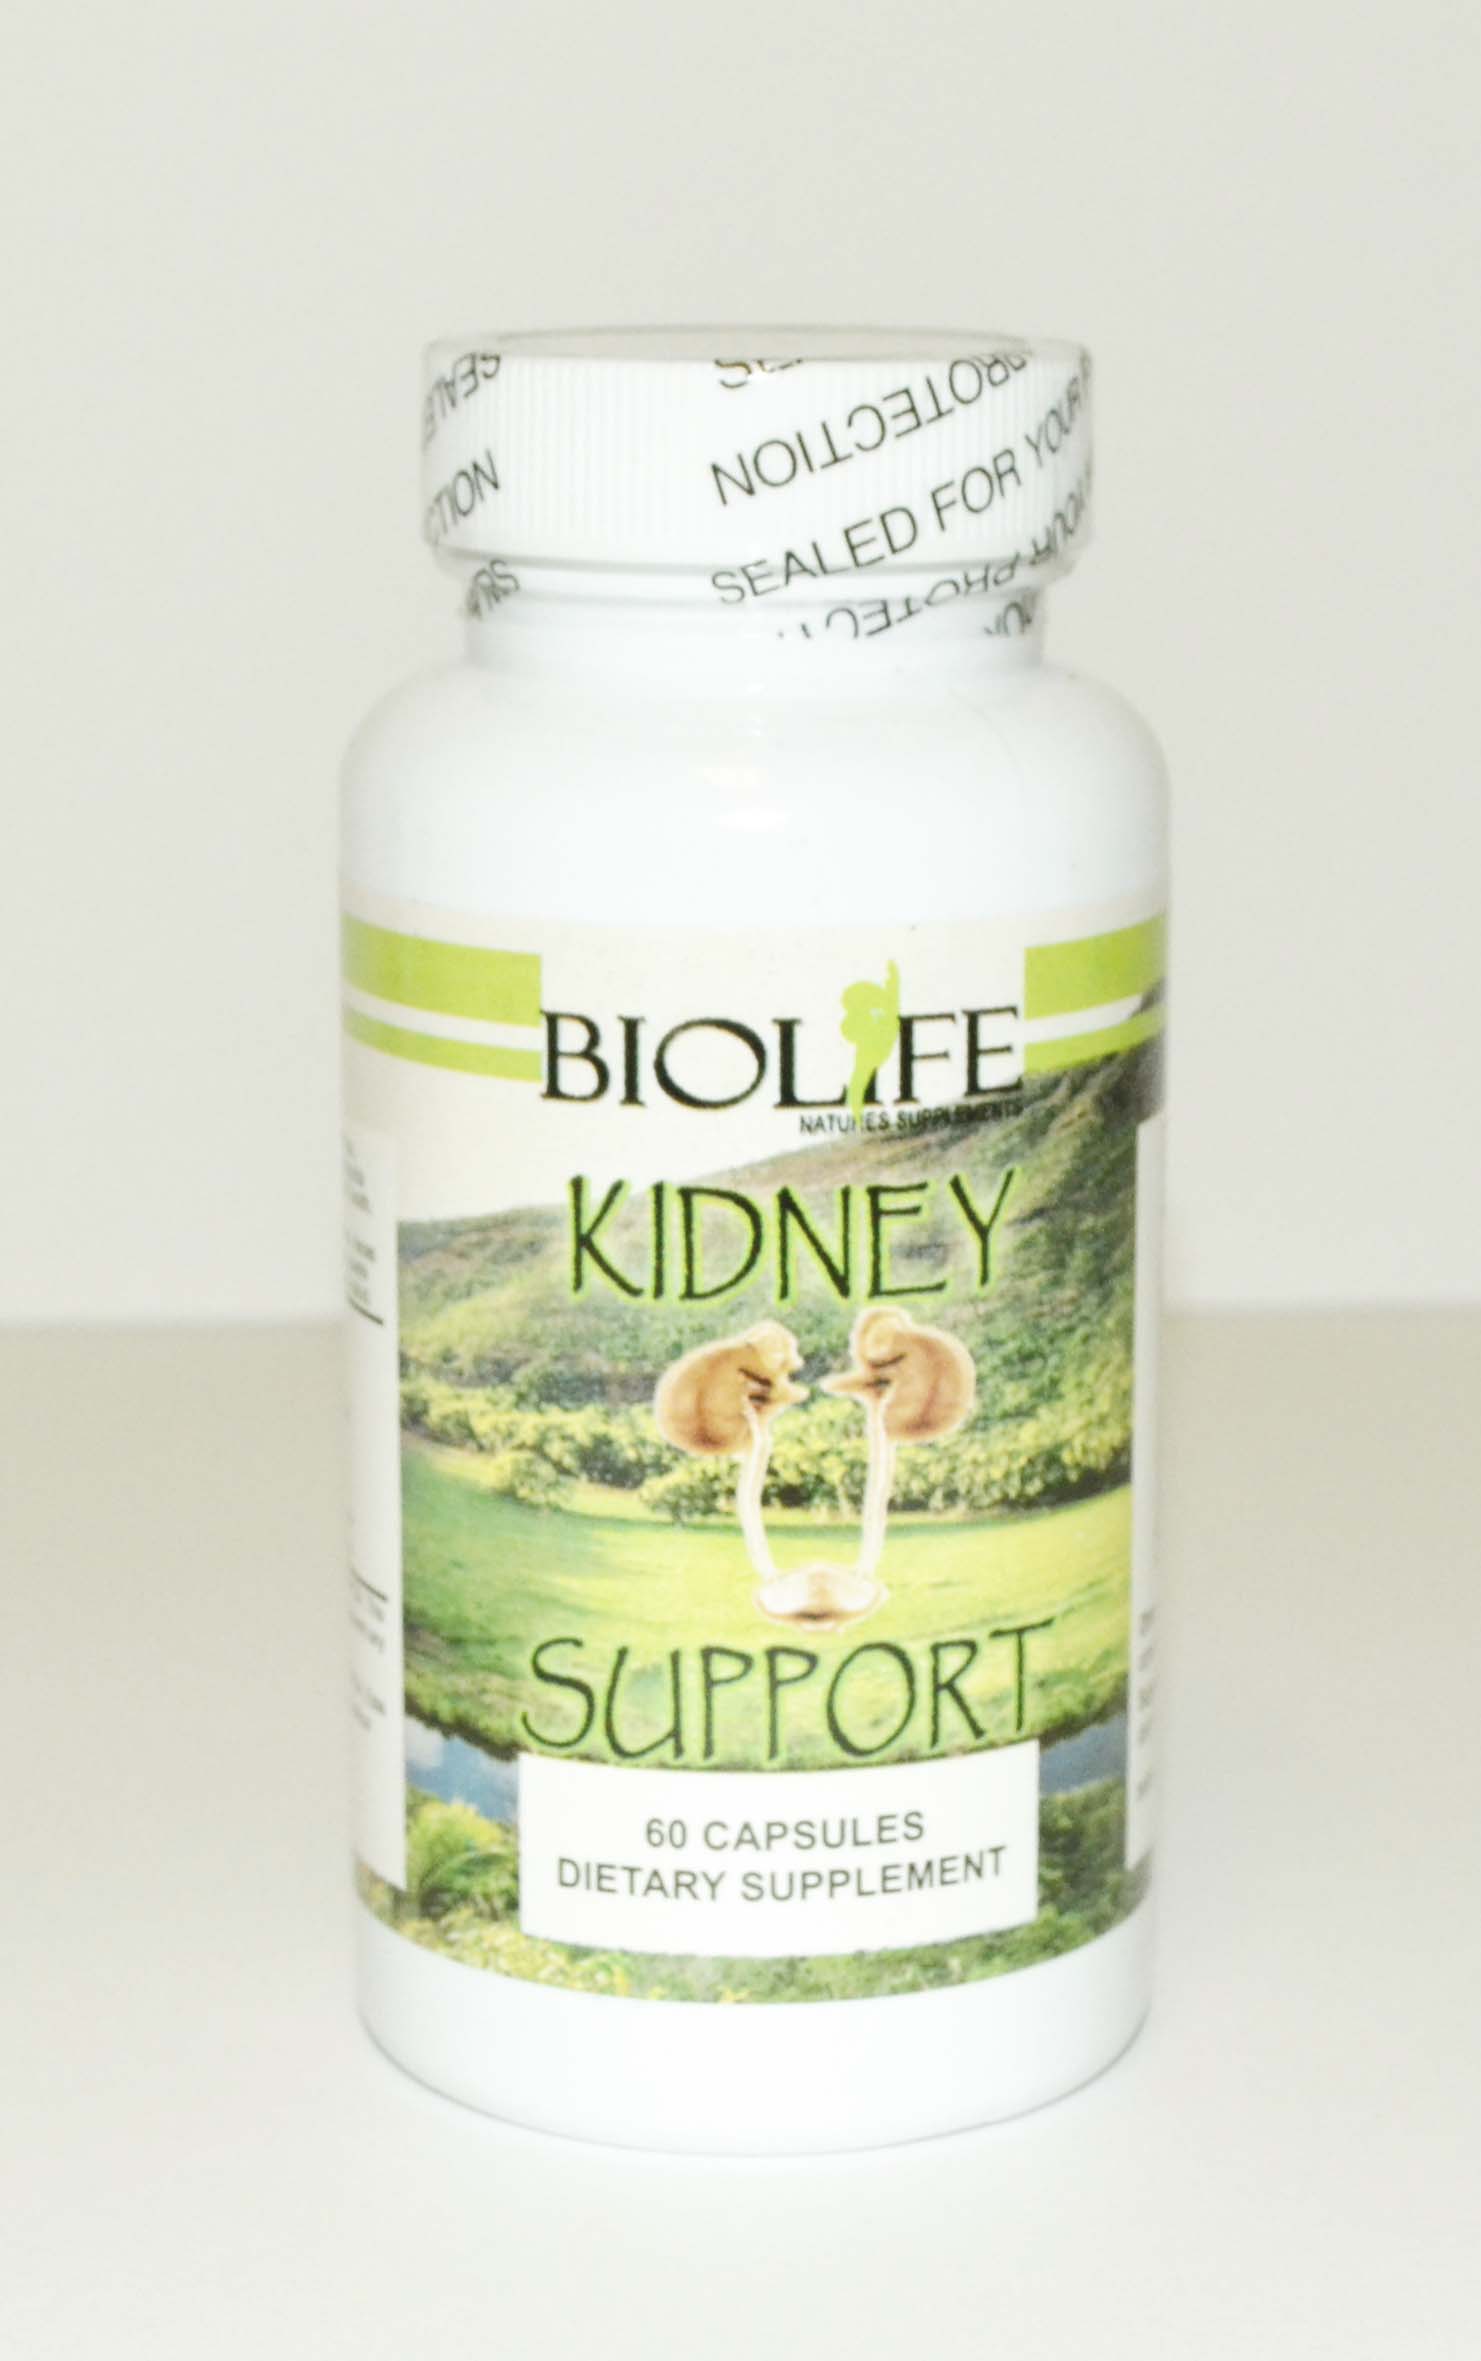 Kidney Support